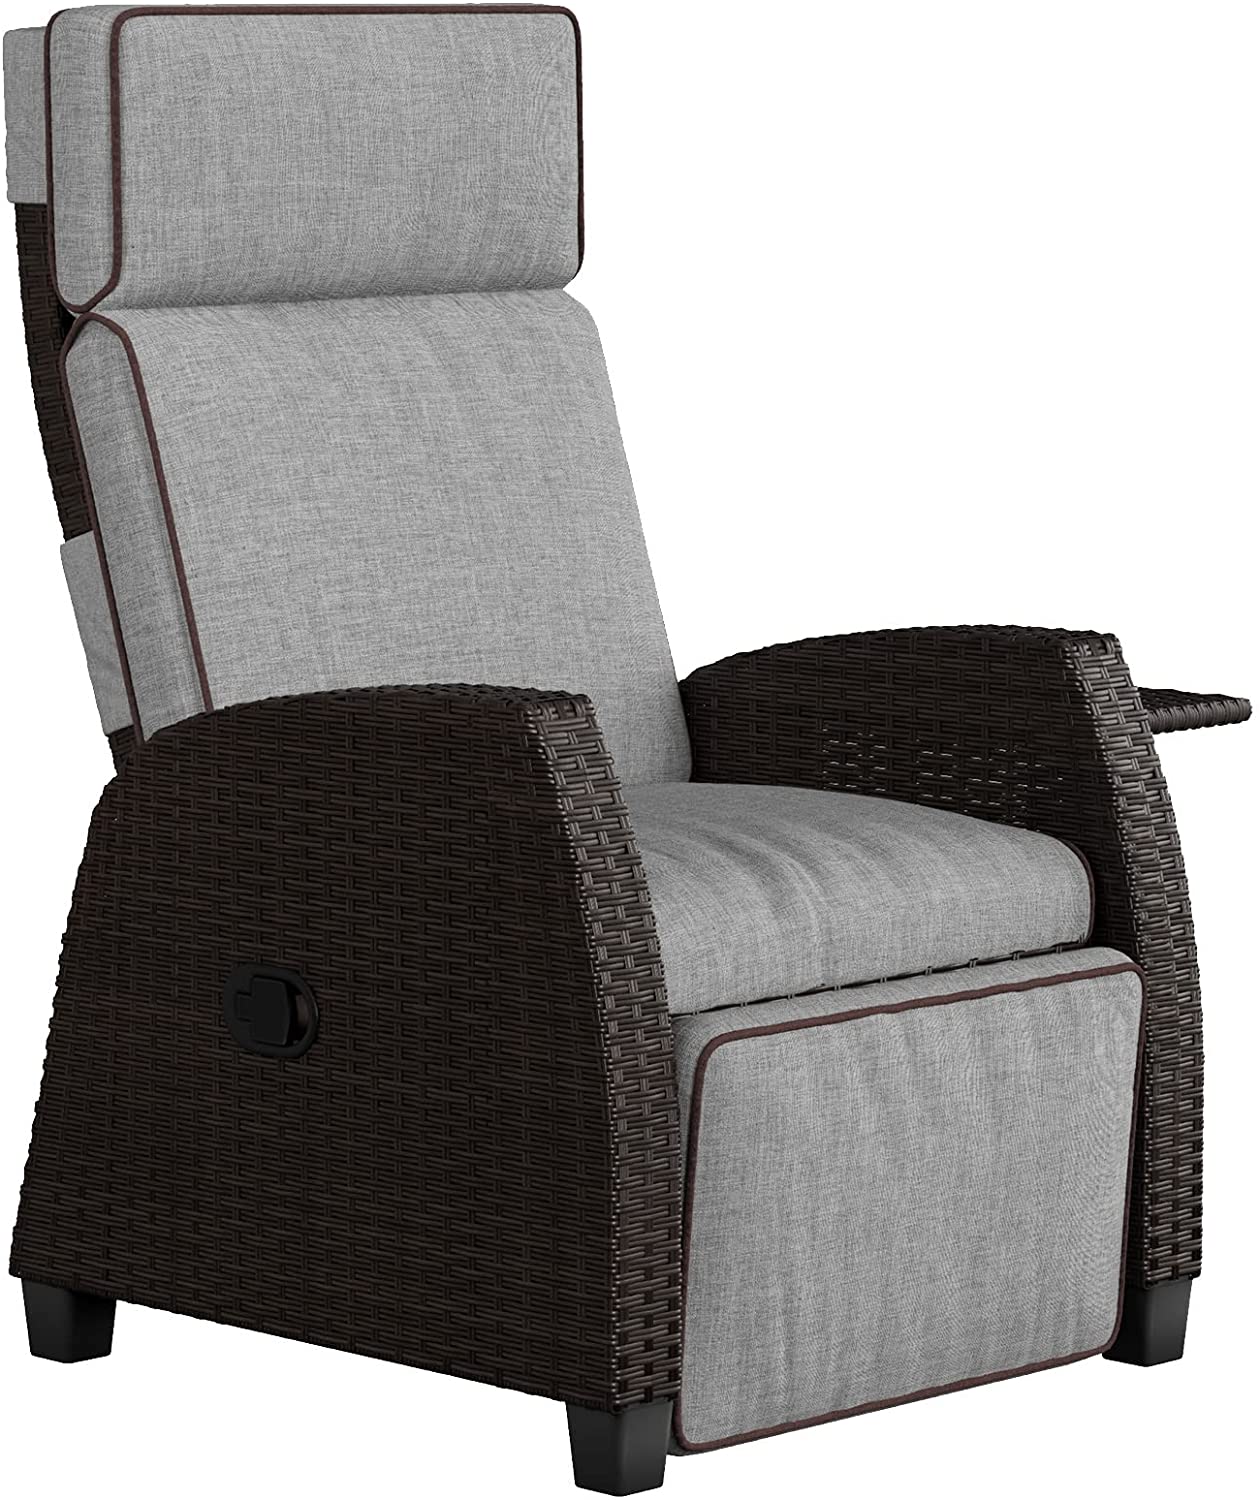 Grand Patio Indoor and Outdoor Recliner Chair